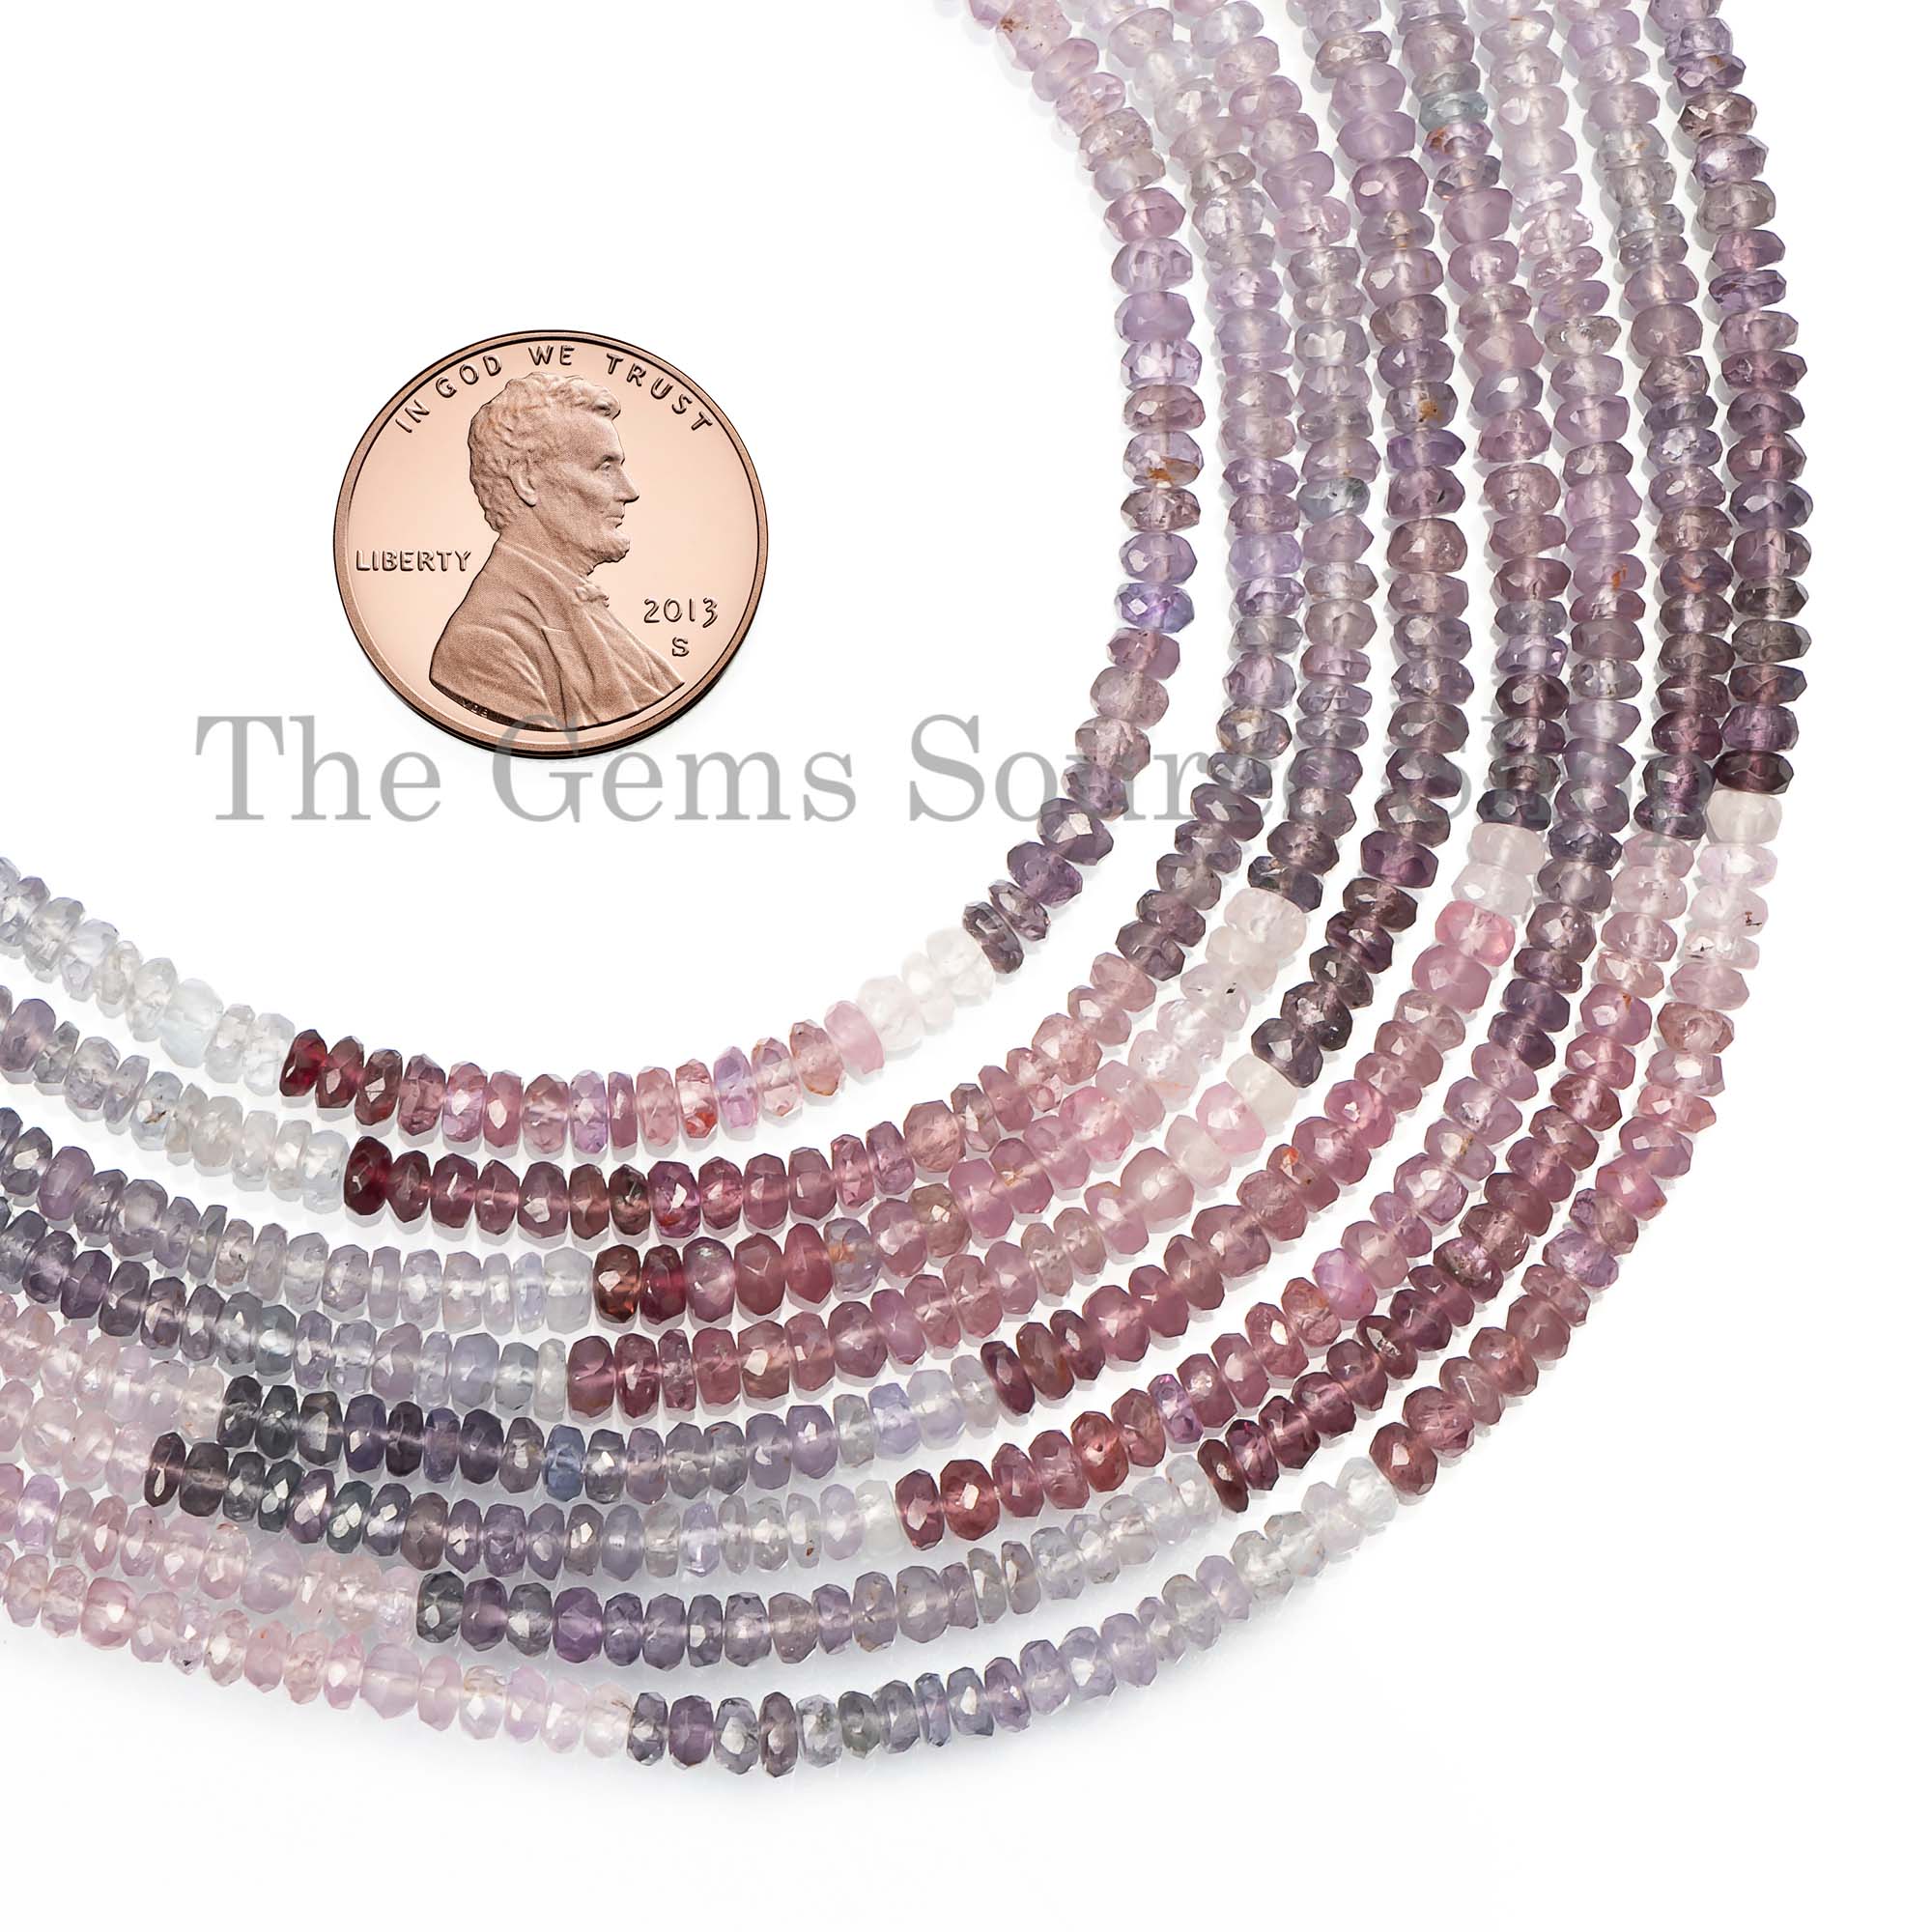 Lavender Blue Spinel Beads, 3-3.50mm Spinel Faceted Beads, Lavender Spinel Rondelle Beads, Faceted Spinel Gemstone Beads,